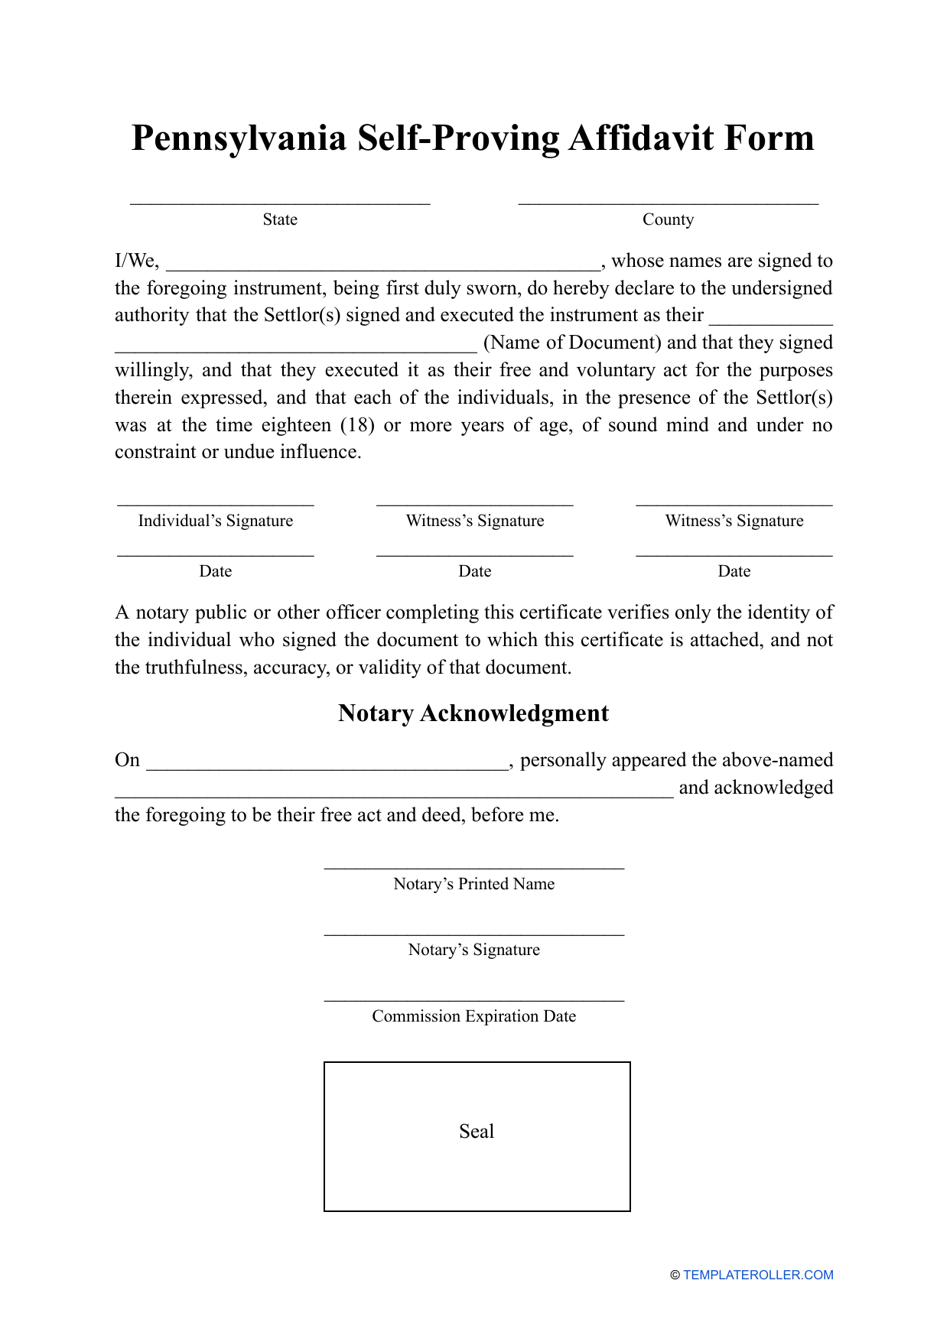 Self-proving Affidavit Form - Pennsylvania, Page 1